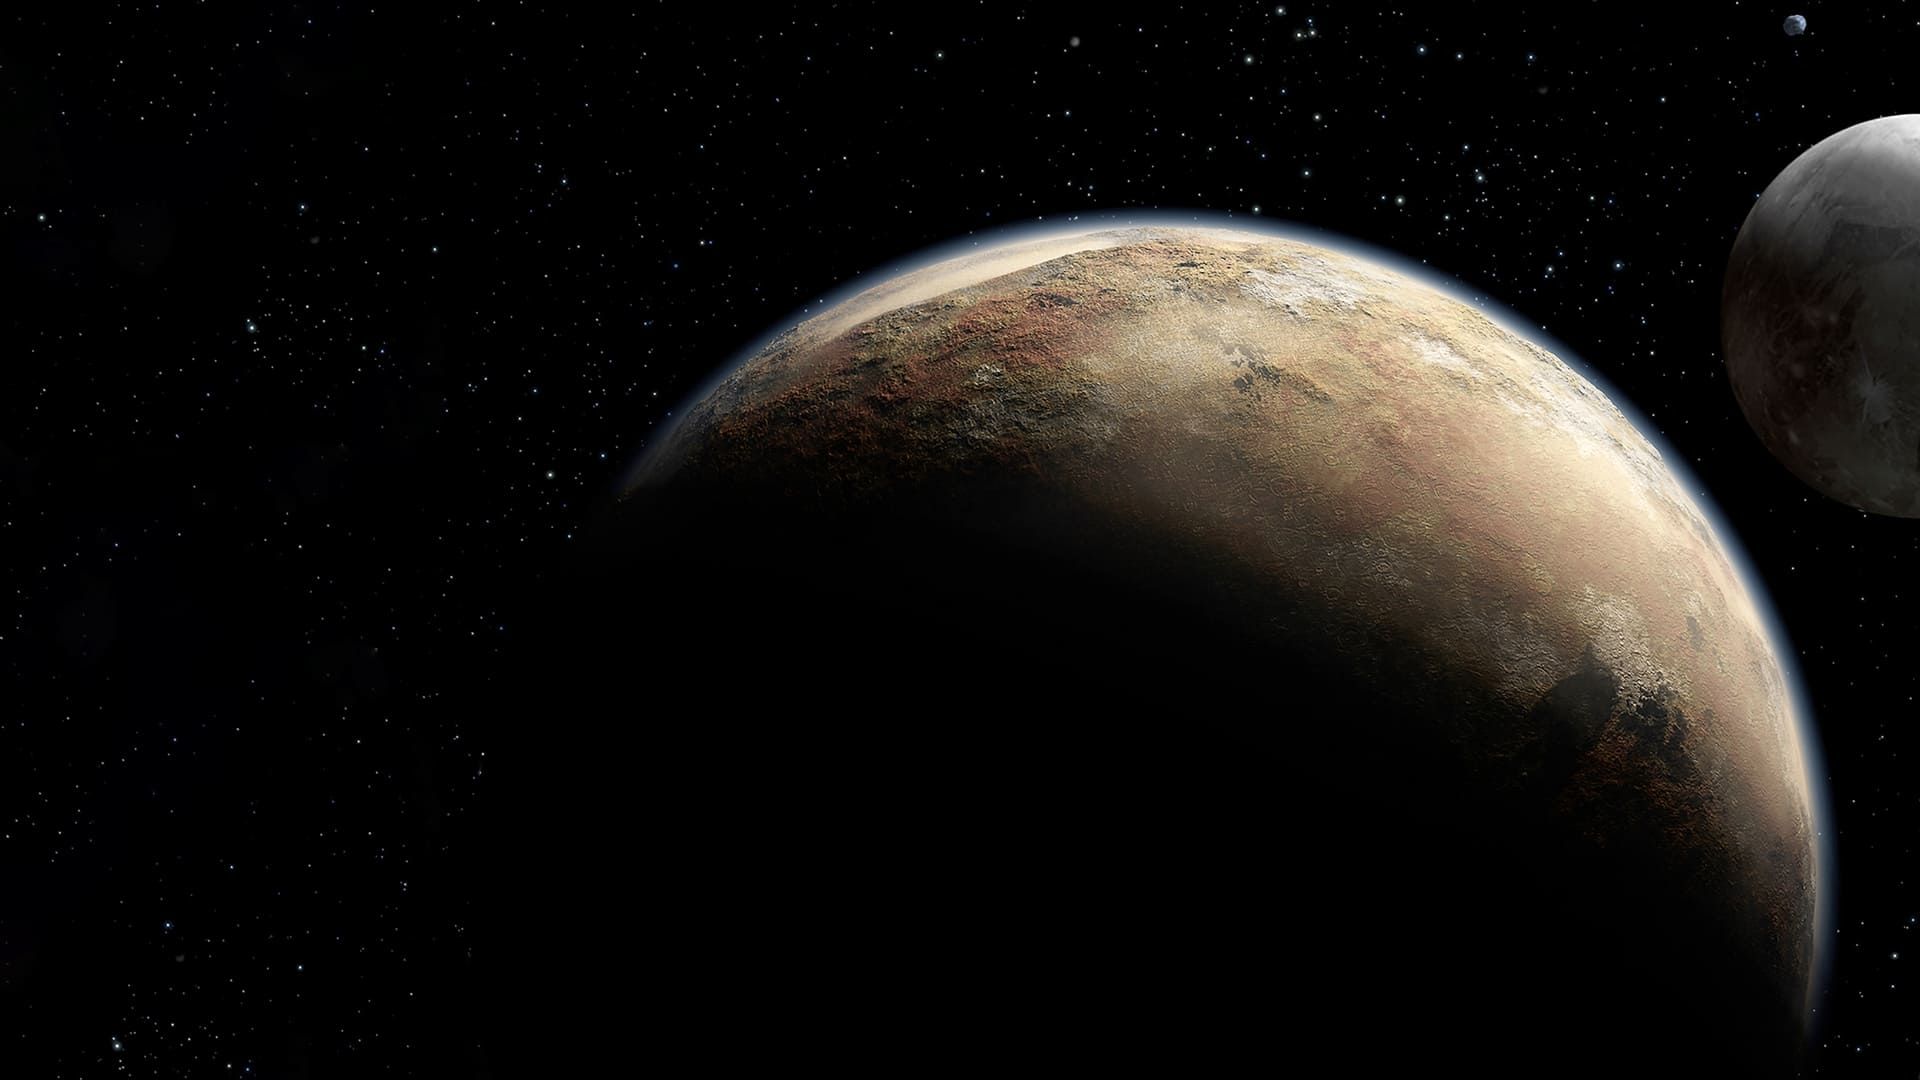 Mission Pluto background